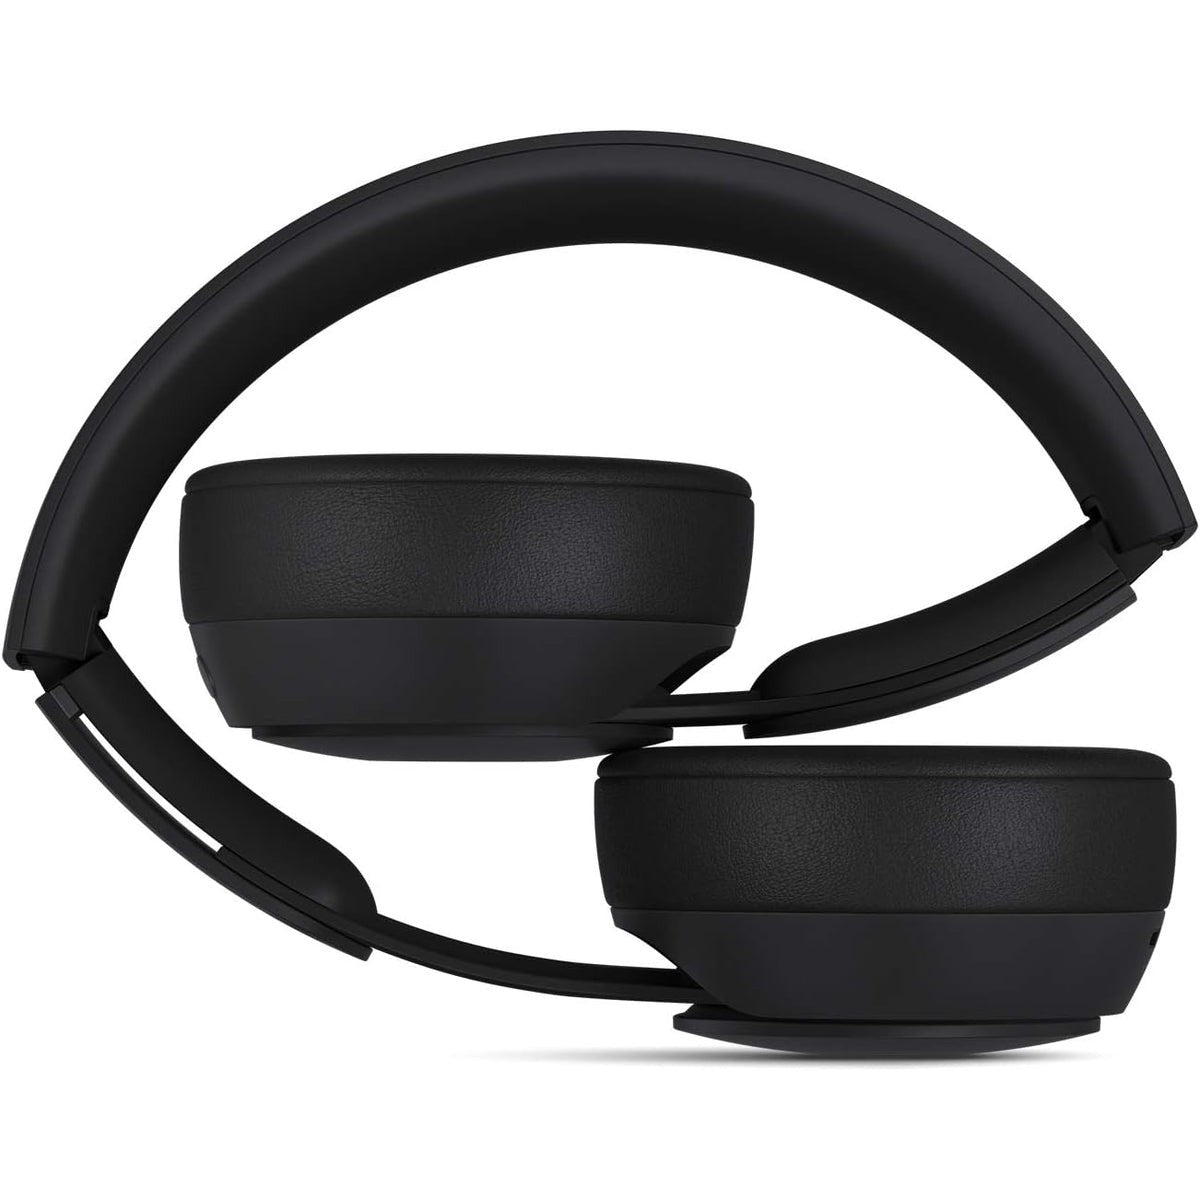 Beats Solo Pro Wireless Headphones - Black - Refurbished Pristine